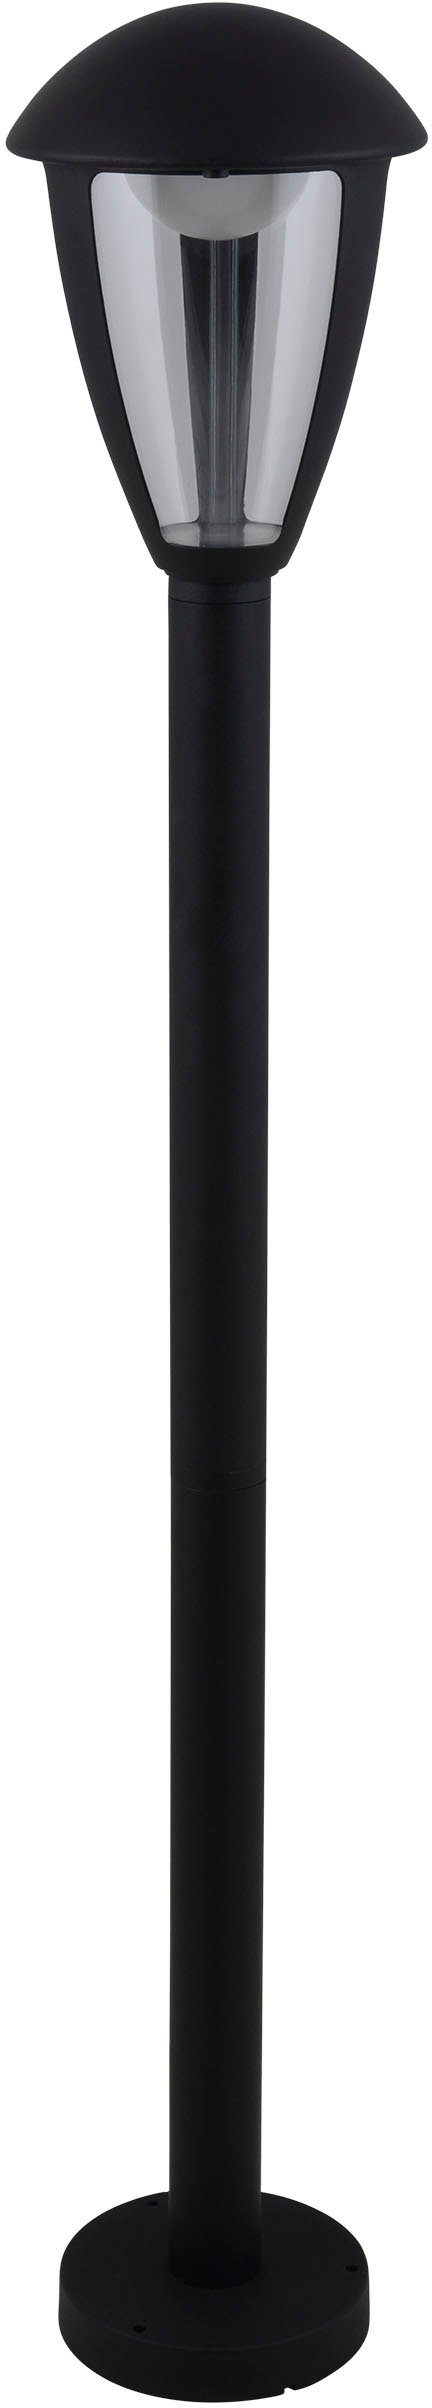 Außen-Stehlampe schwarz Warmweiß, 100cm Höhe IP44 Clint, LED Kunststoff LED 14x klar näve Aluminium incl.